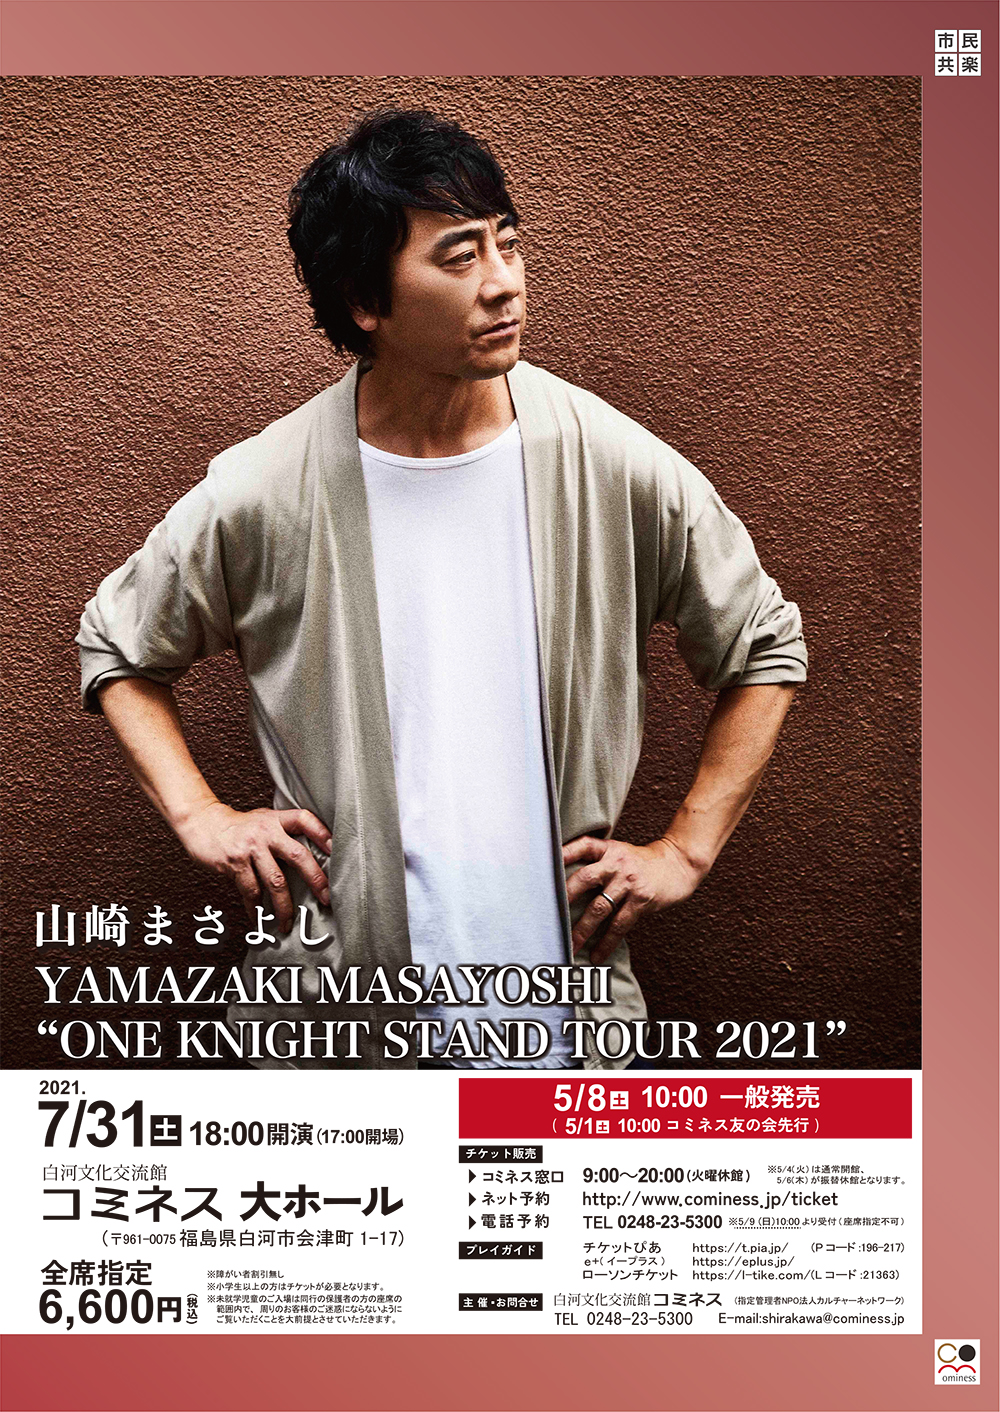 YAMAZAKI MASAYOSHI ”ONE KNIGHT STAND TOUR 2021” | 白河 